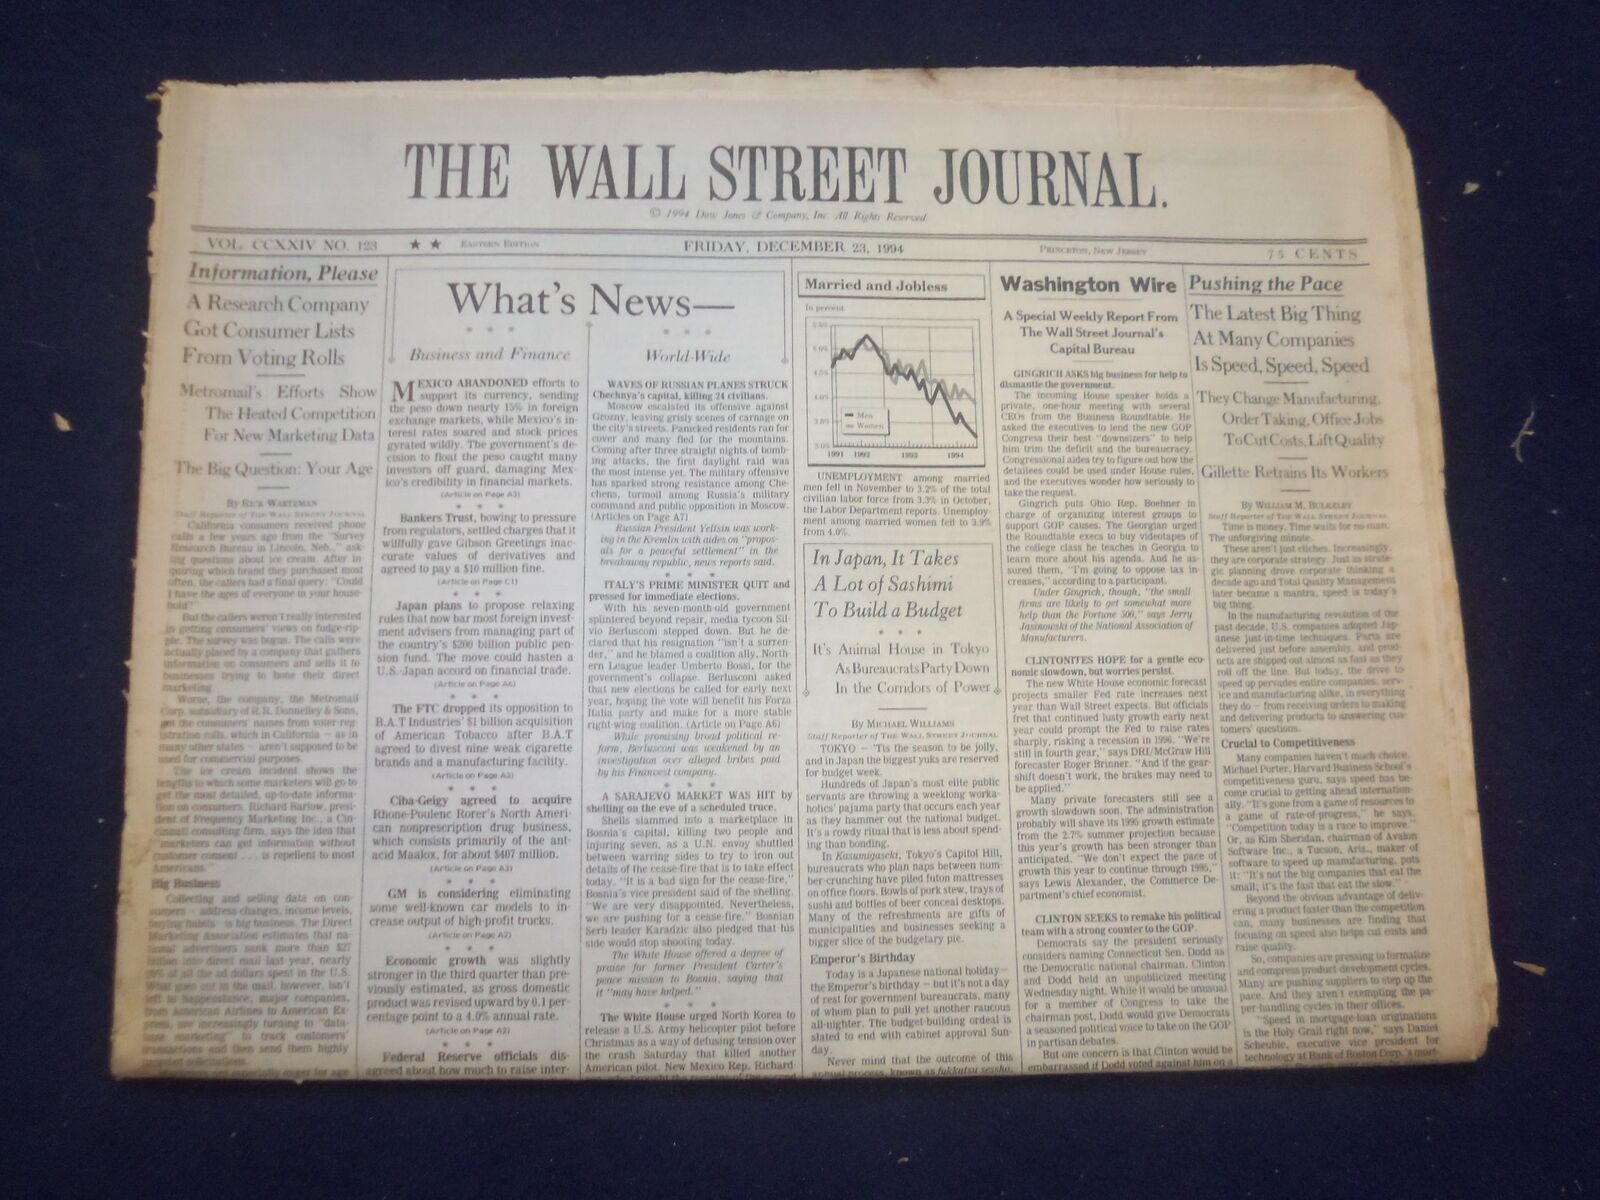 1994 DEC 23 THE WALL STREET JOURNAL -SPEED, SPEED, SPEED AT COMPANIES - WJ 161